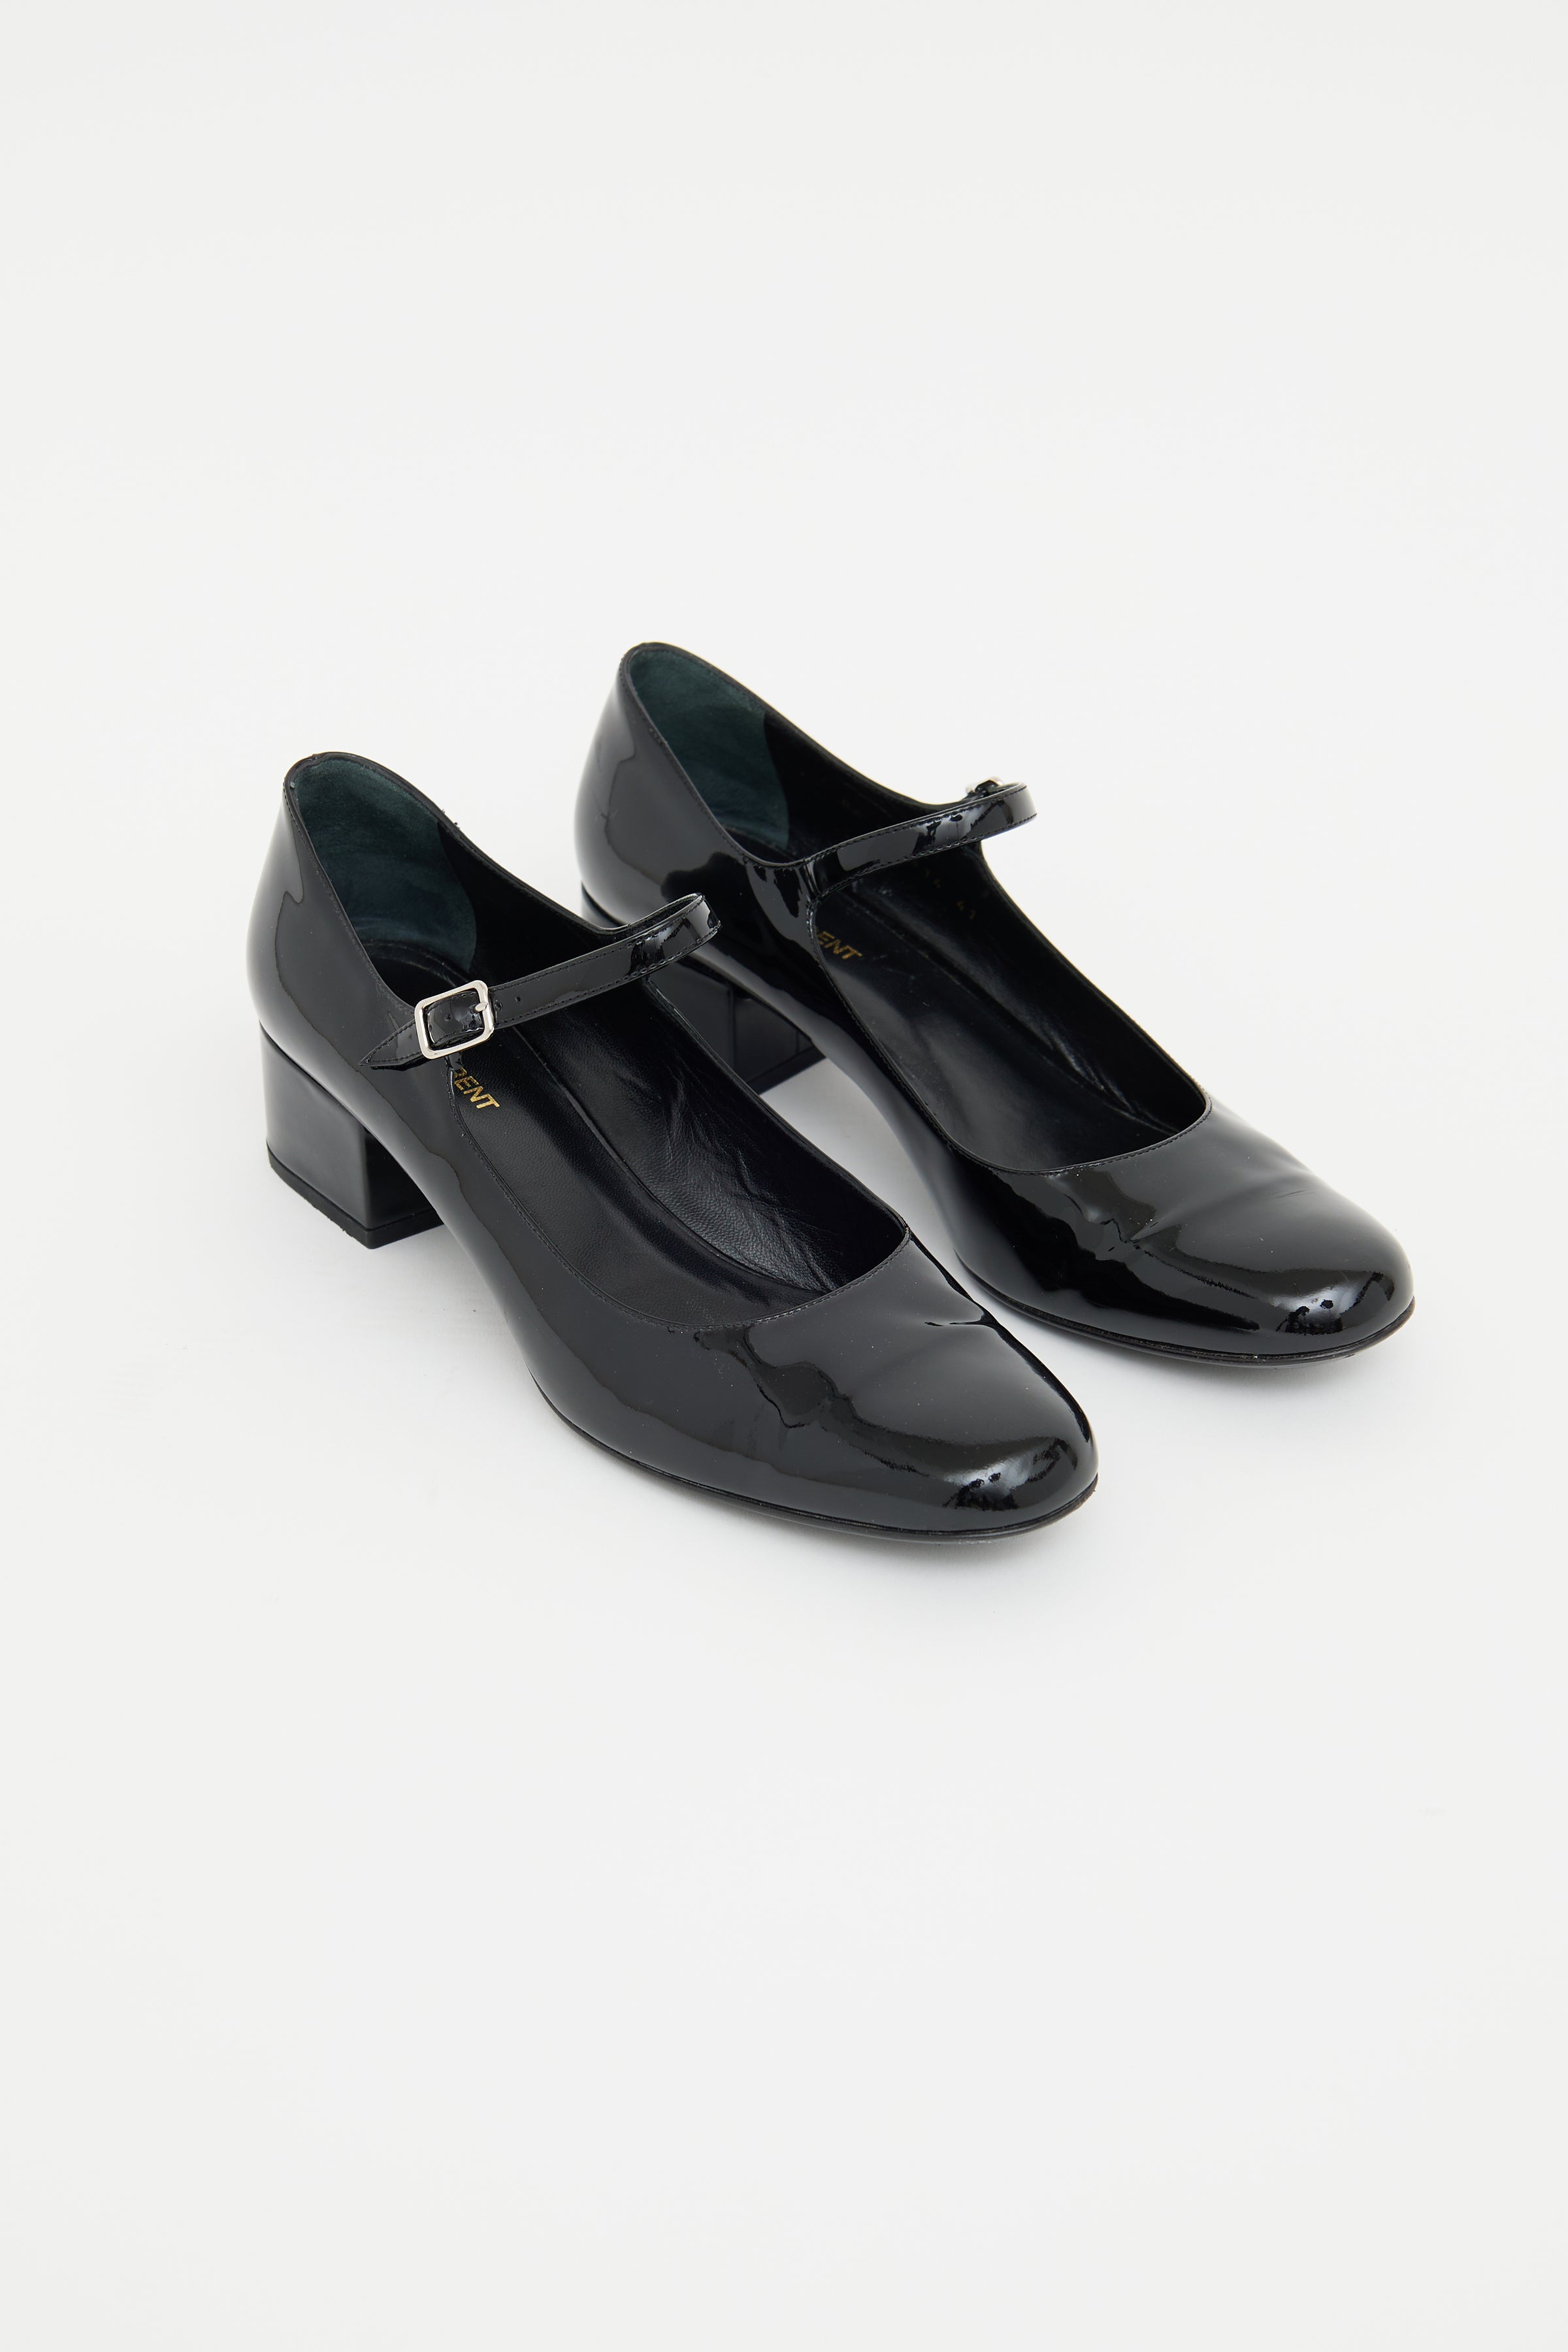 15 Best Mary Jane Shoes - Flats, Platforms, Heels